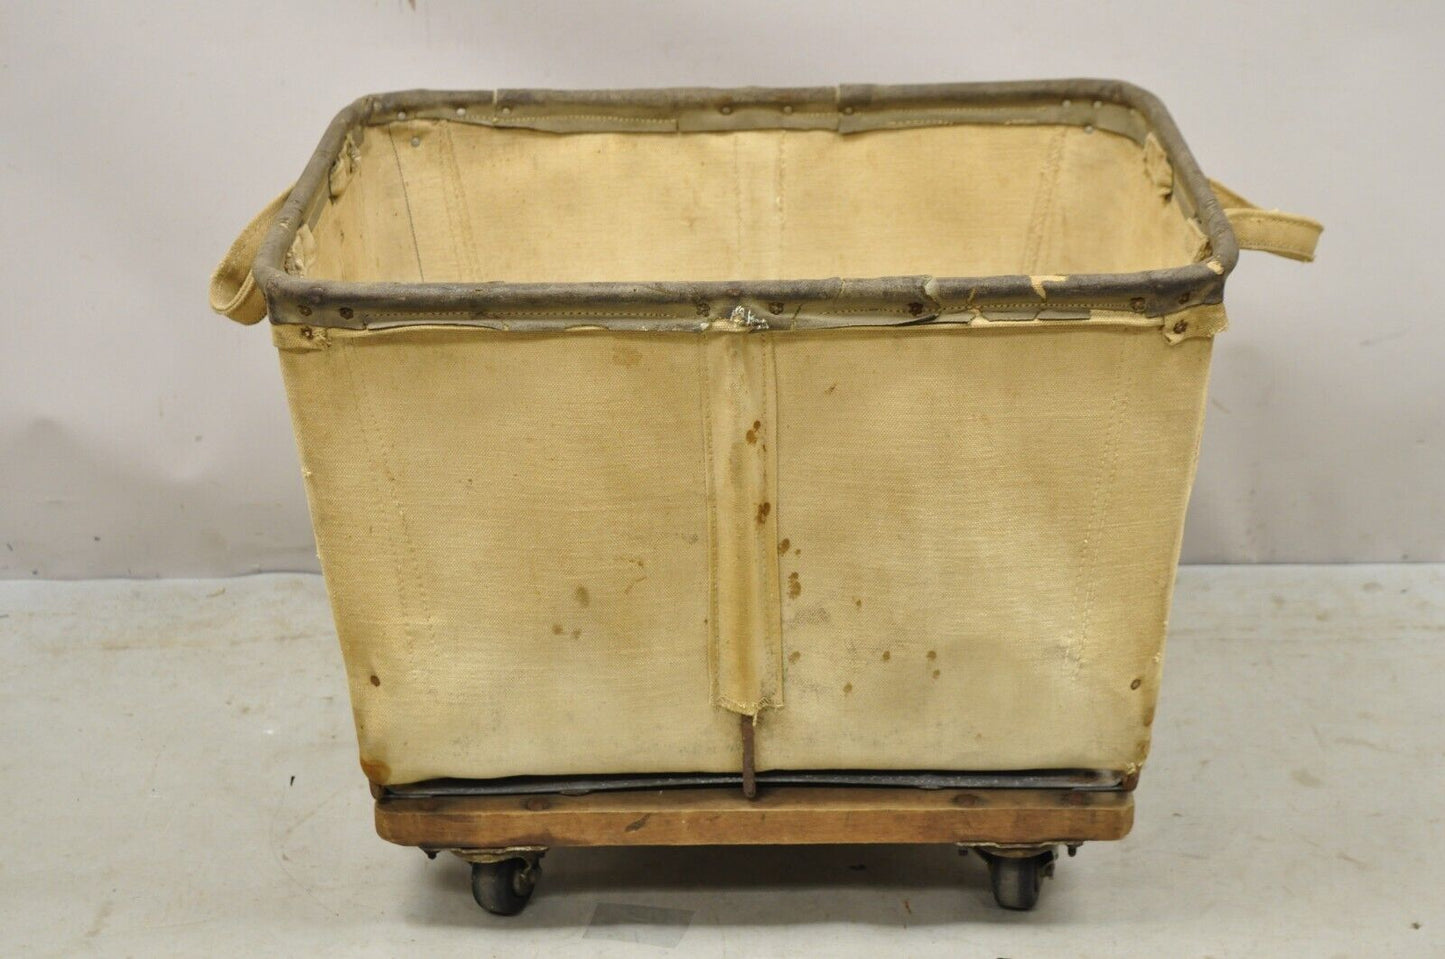 Vintage Industrial Canvas Rolling Storage Laundry Bin by Steel on Wheels